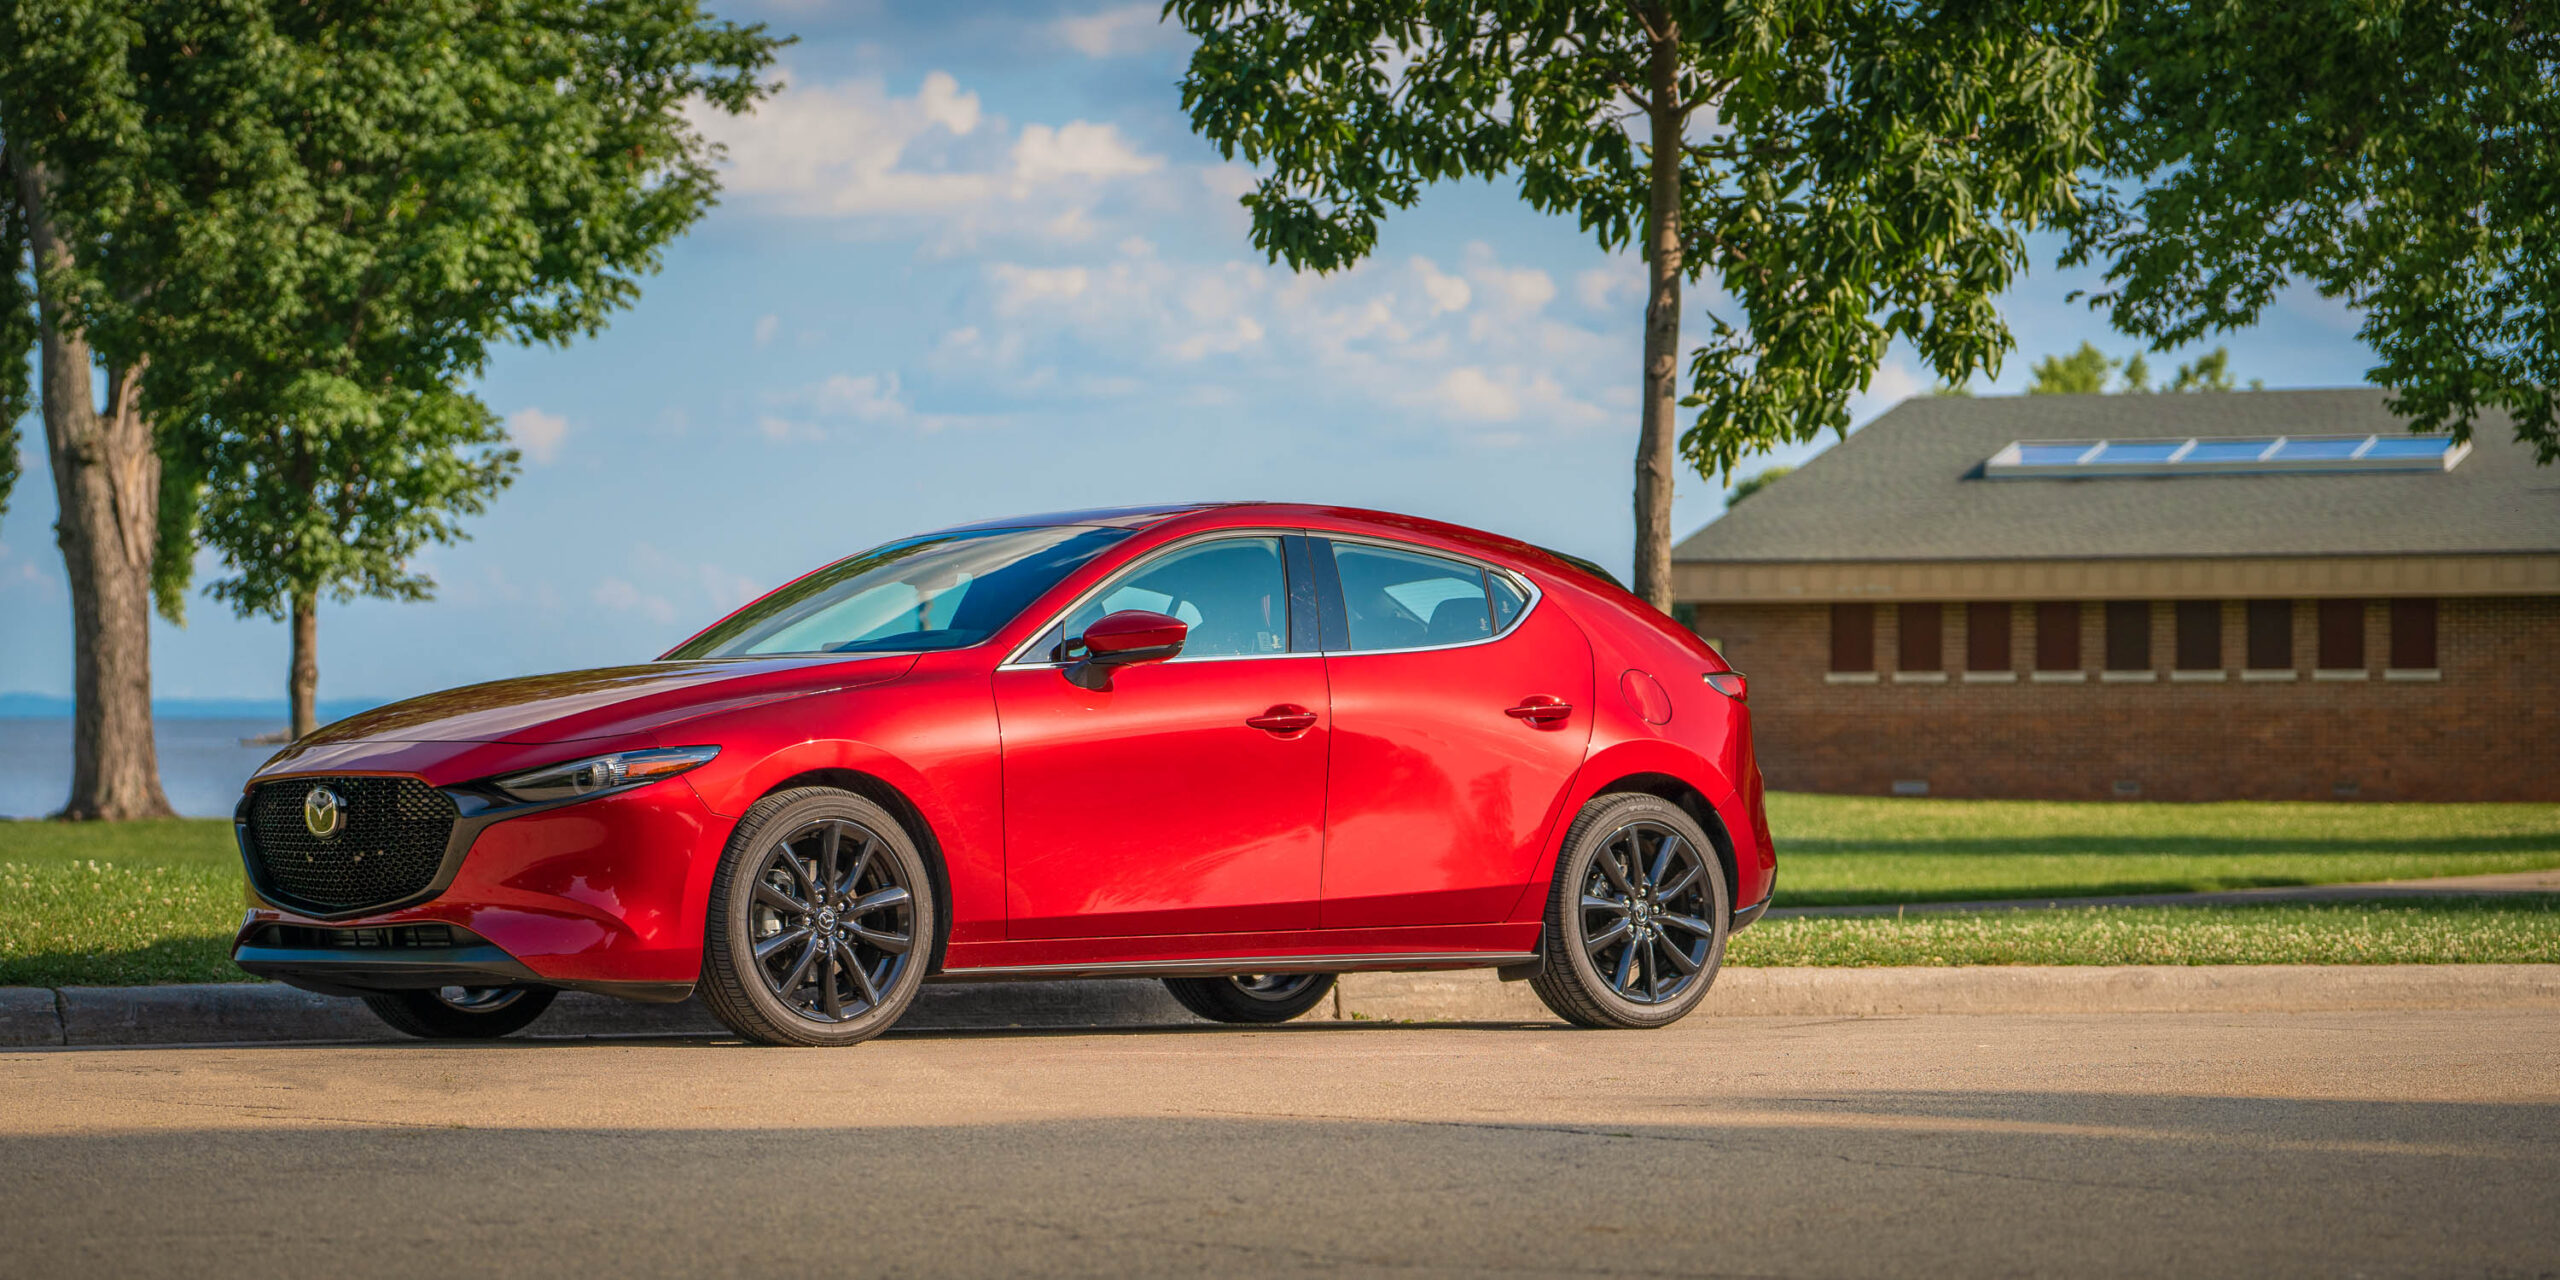 2019 Mazda3 Hatchback AWD Review – Comfortable Alternative